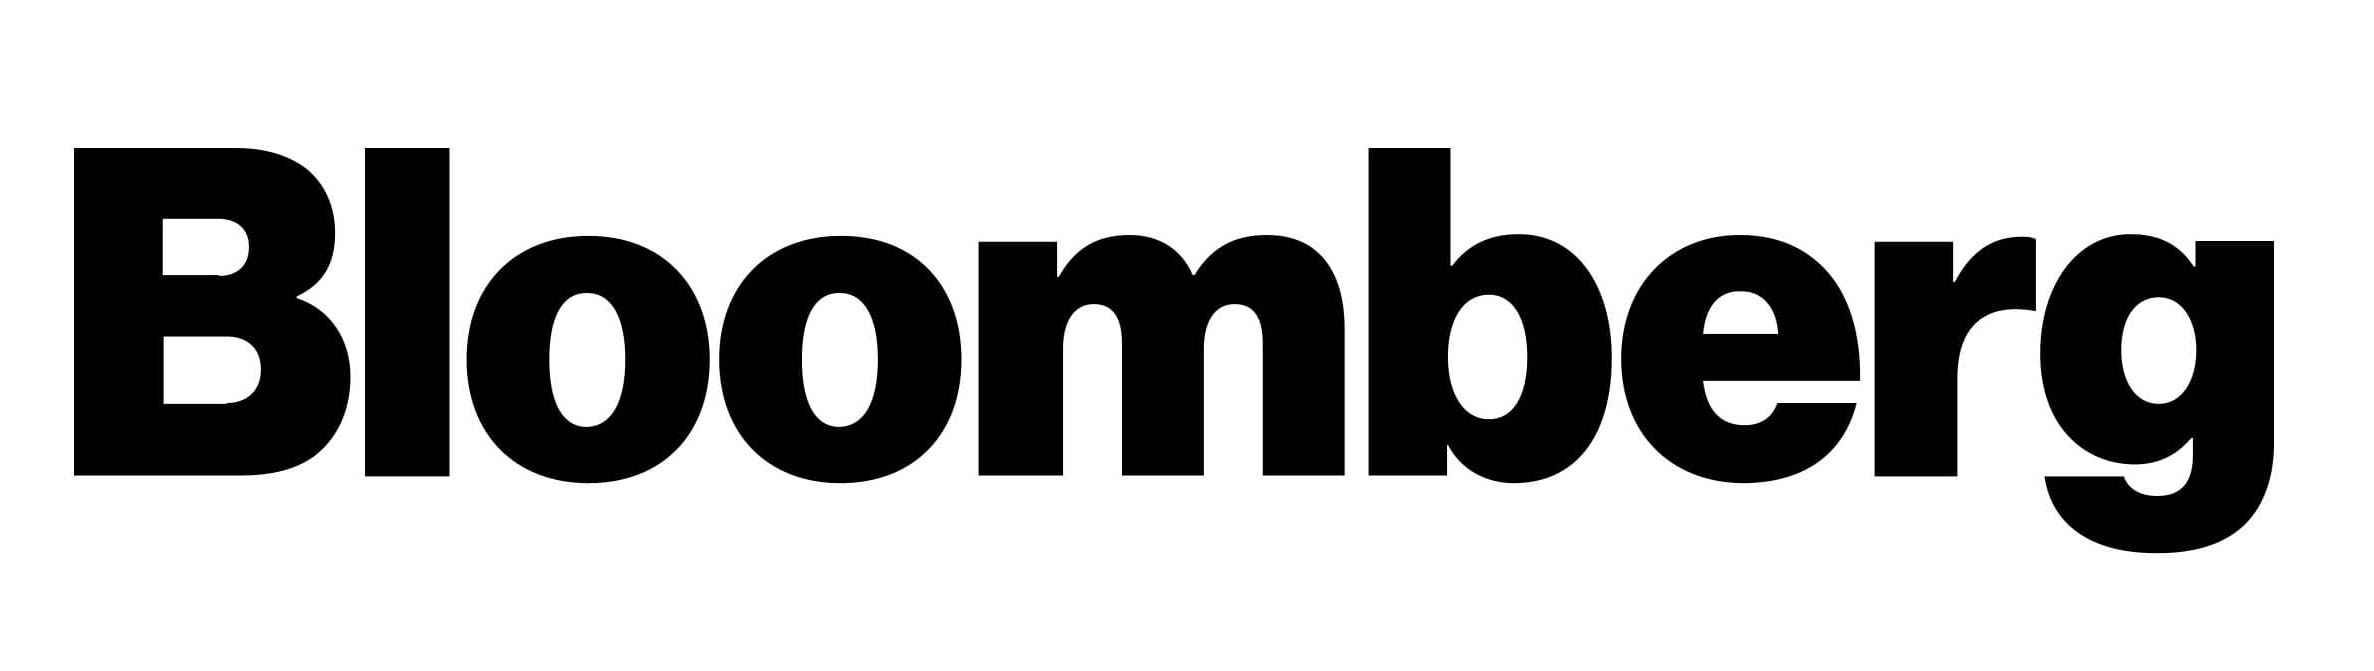 Bloomberg-logо.jpg